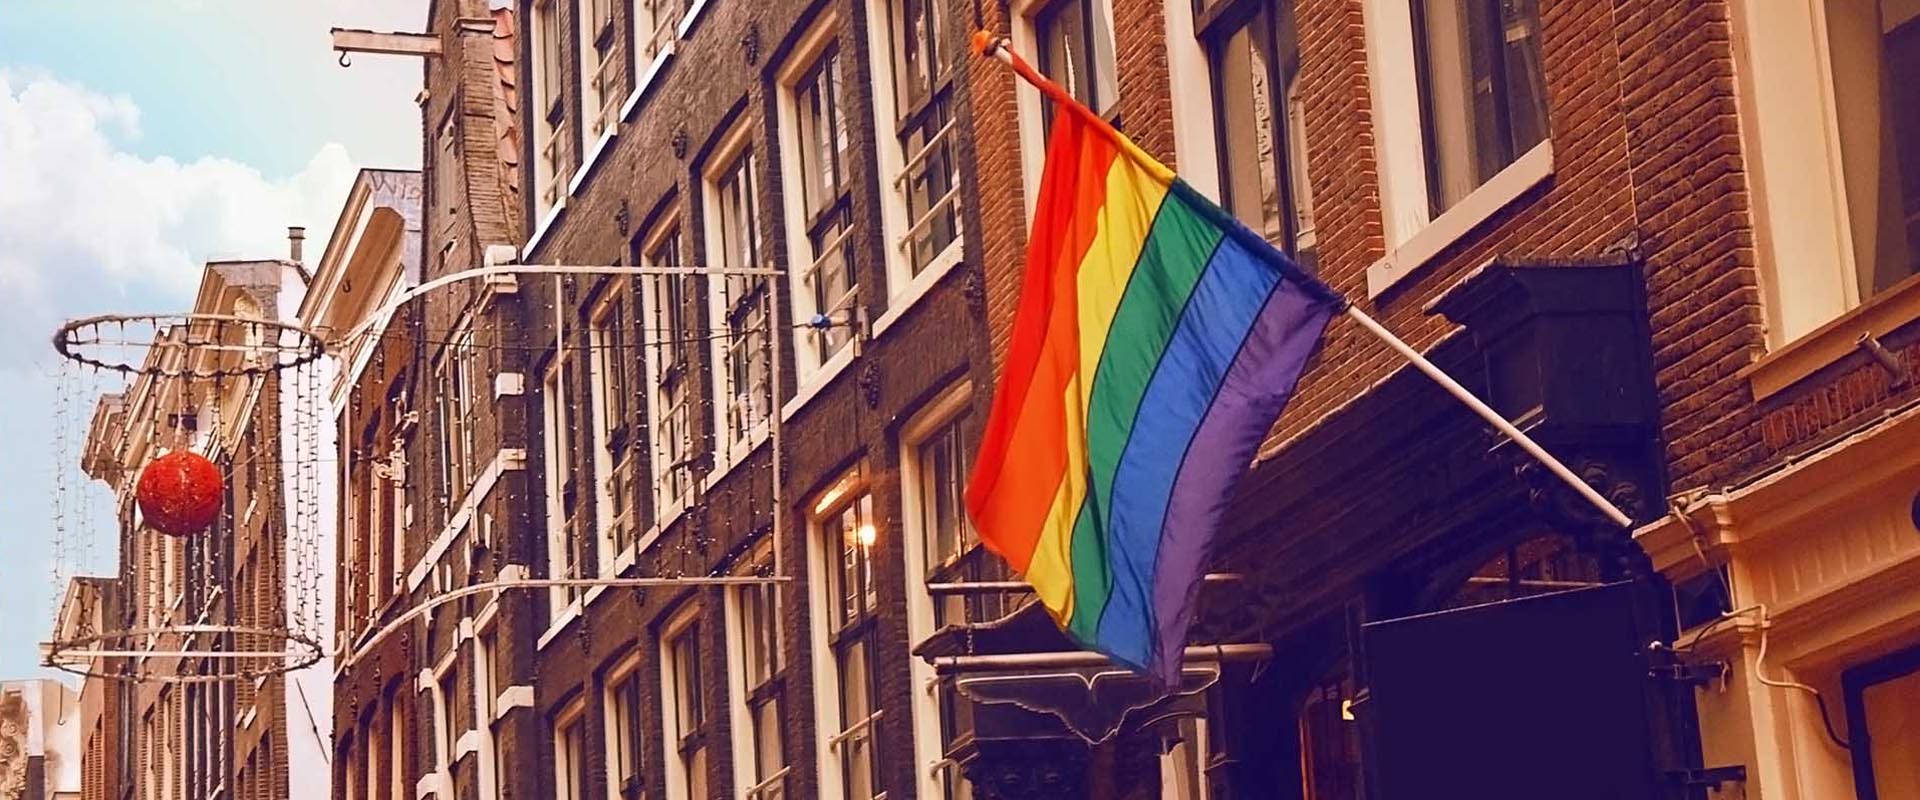 ETC Handbook on the Lesbian, Gay, Bisexual, Transgender and Queer (LGBTQ) Travel Segment